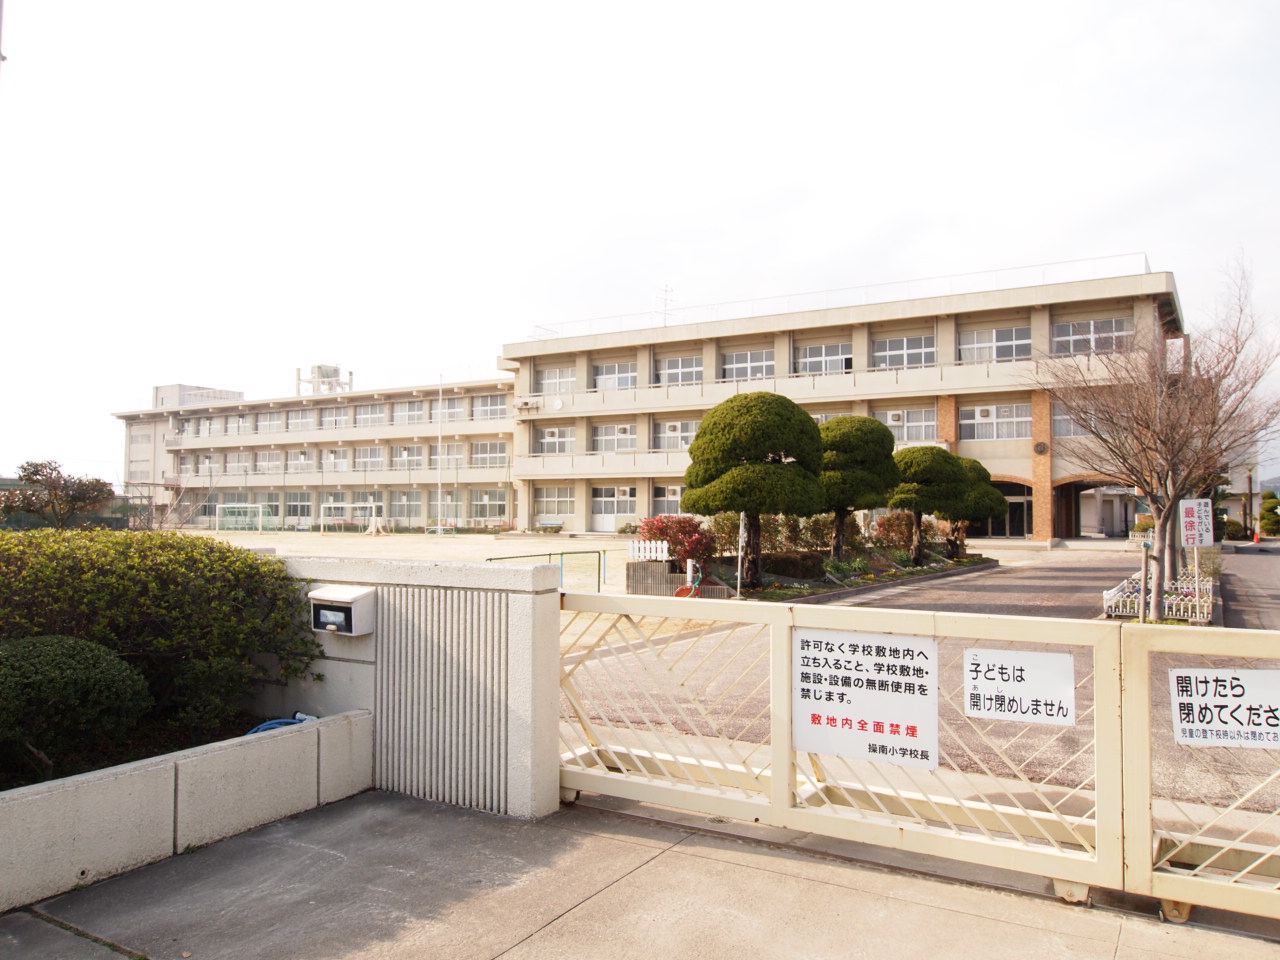 Primary school. 1141m to Okayama Tatsumisao Minami Elementary School (Elementary School)